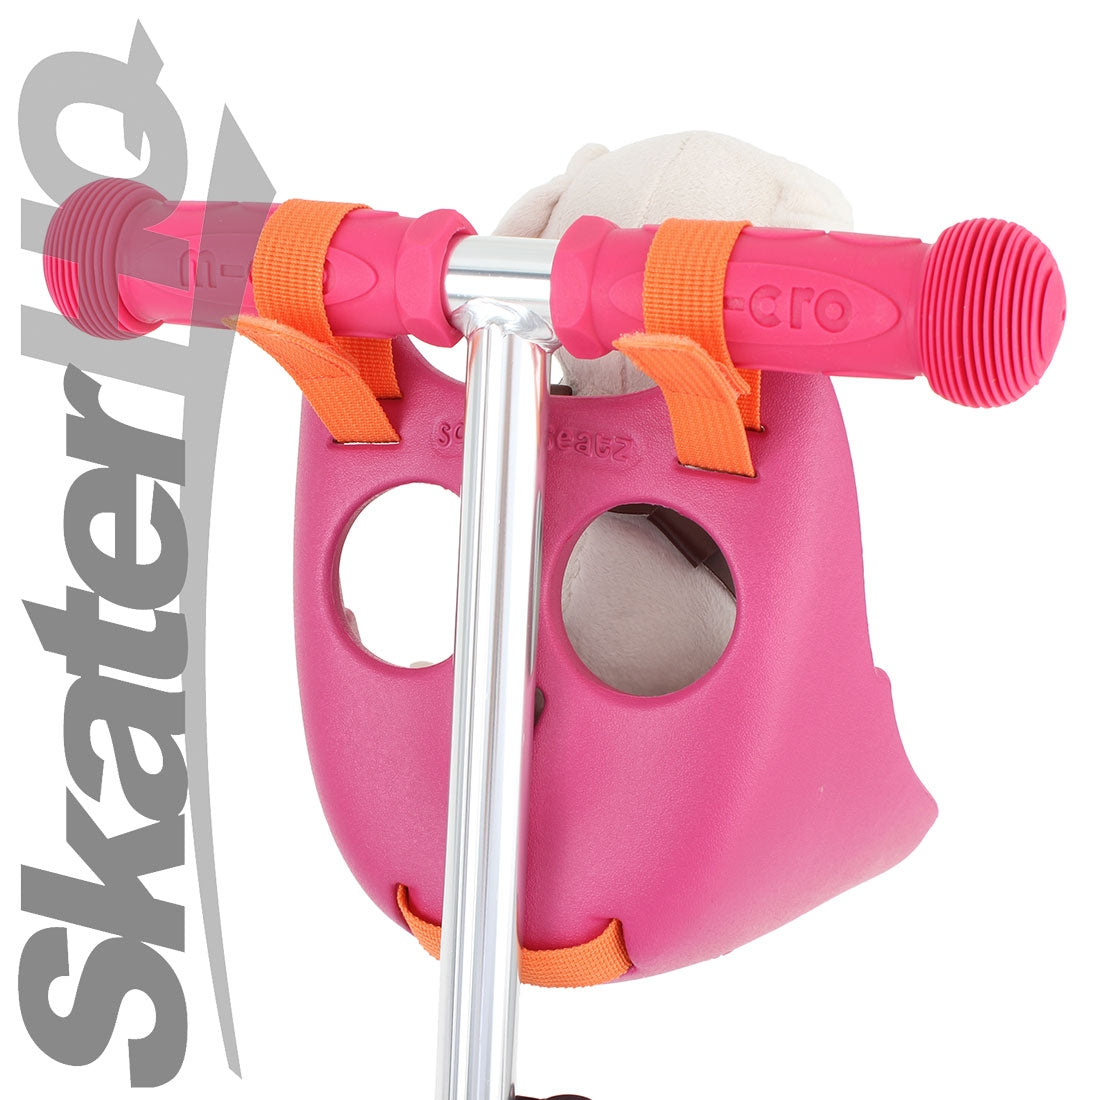 Scootaseatz Owl Seat - Pink Scooter Accessories